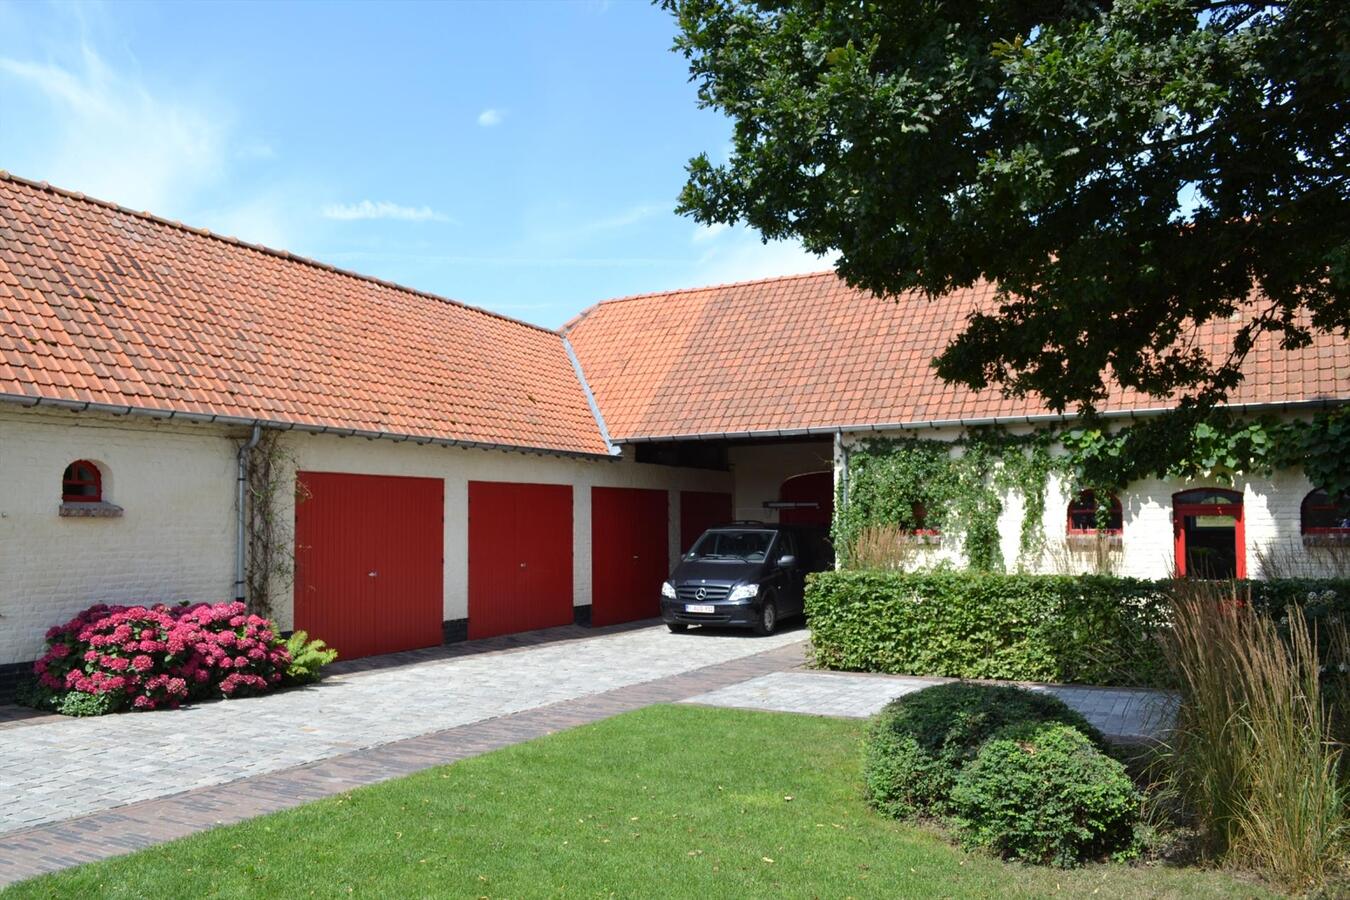 Property sold in Zottegem